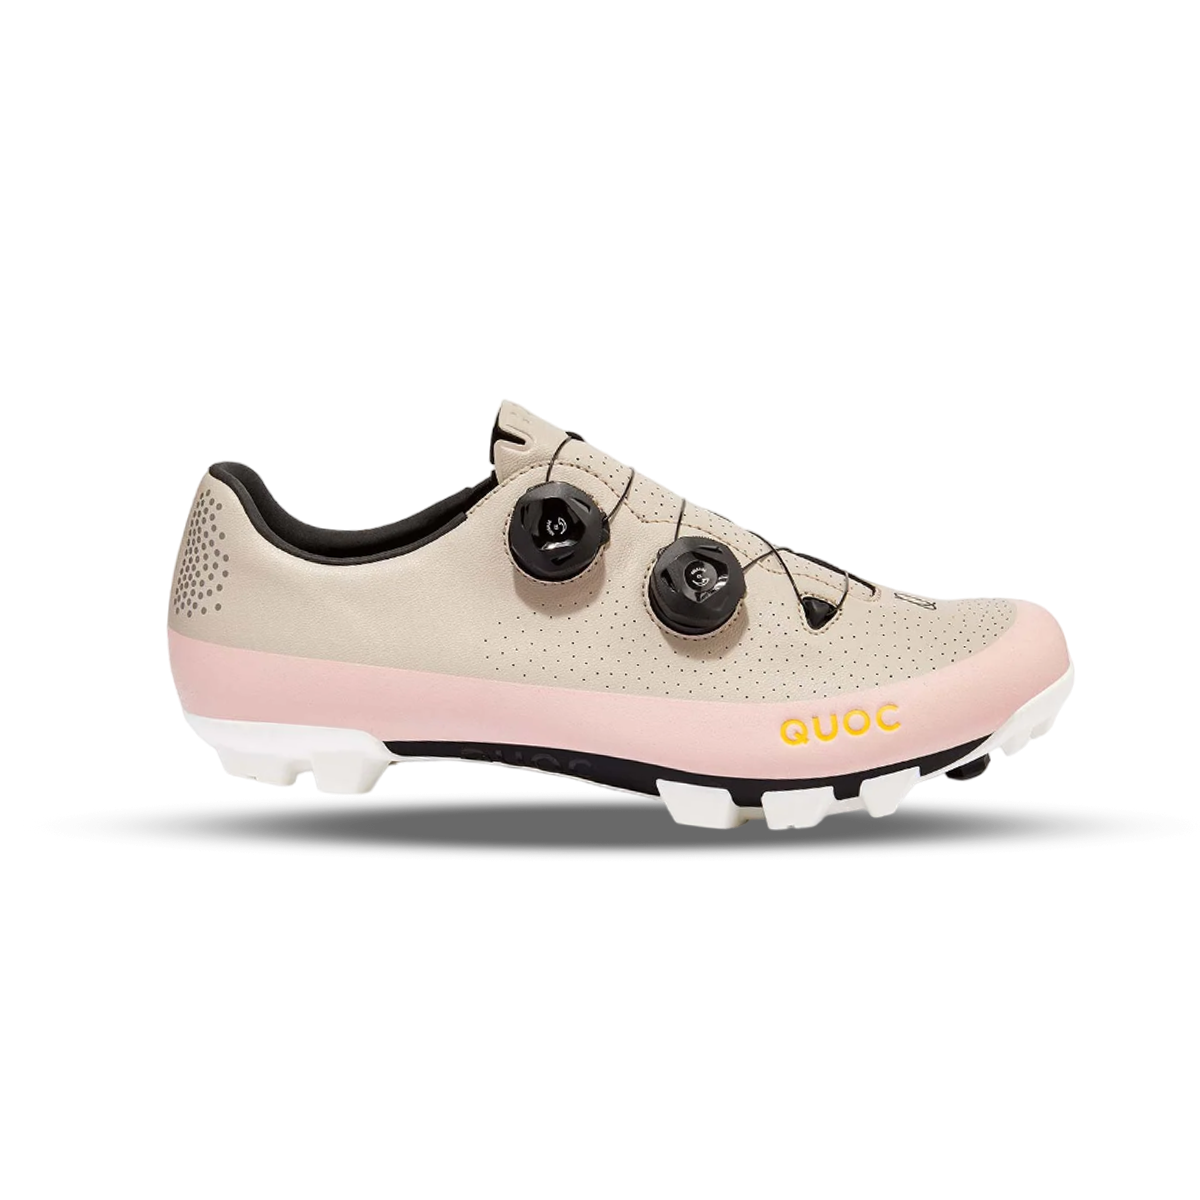 Gran Tourer XC Shoes - Dusty Pink